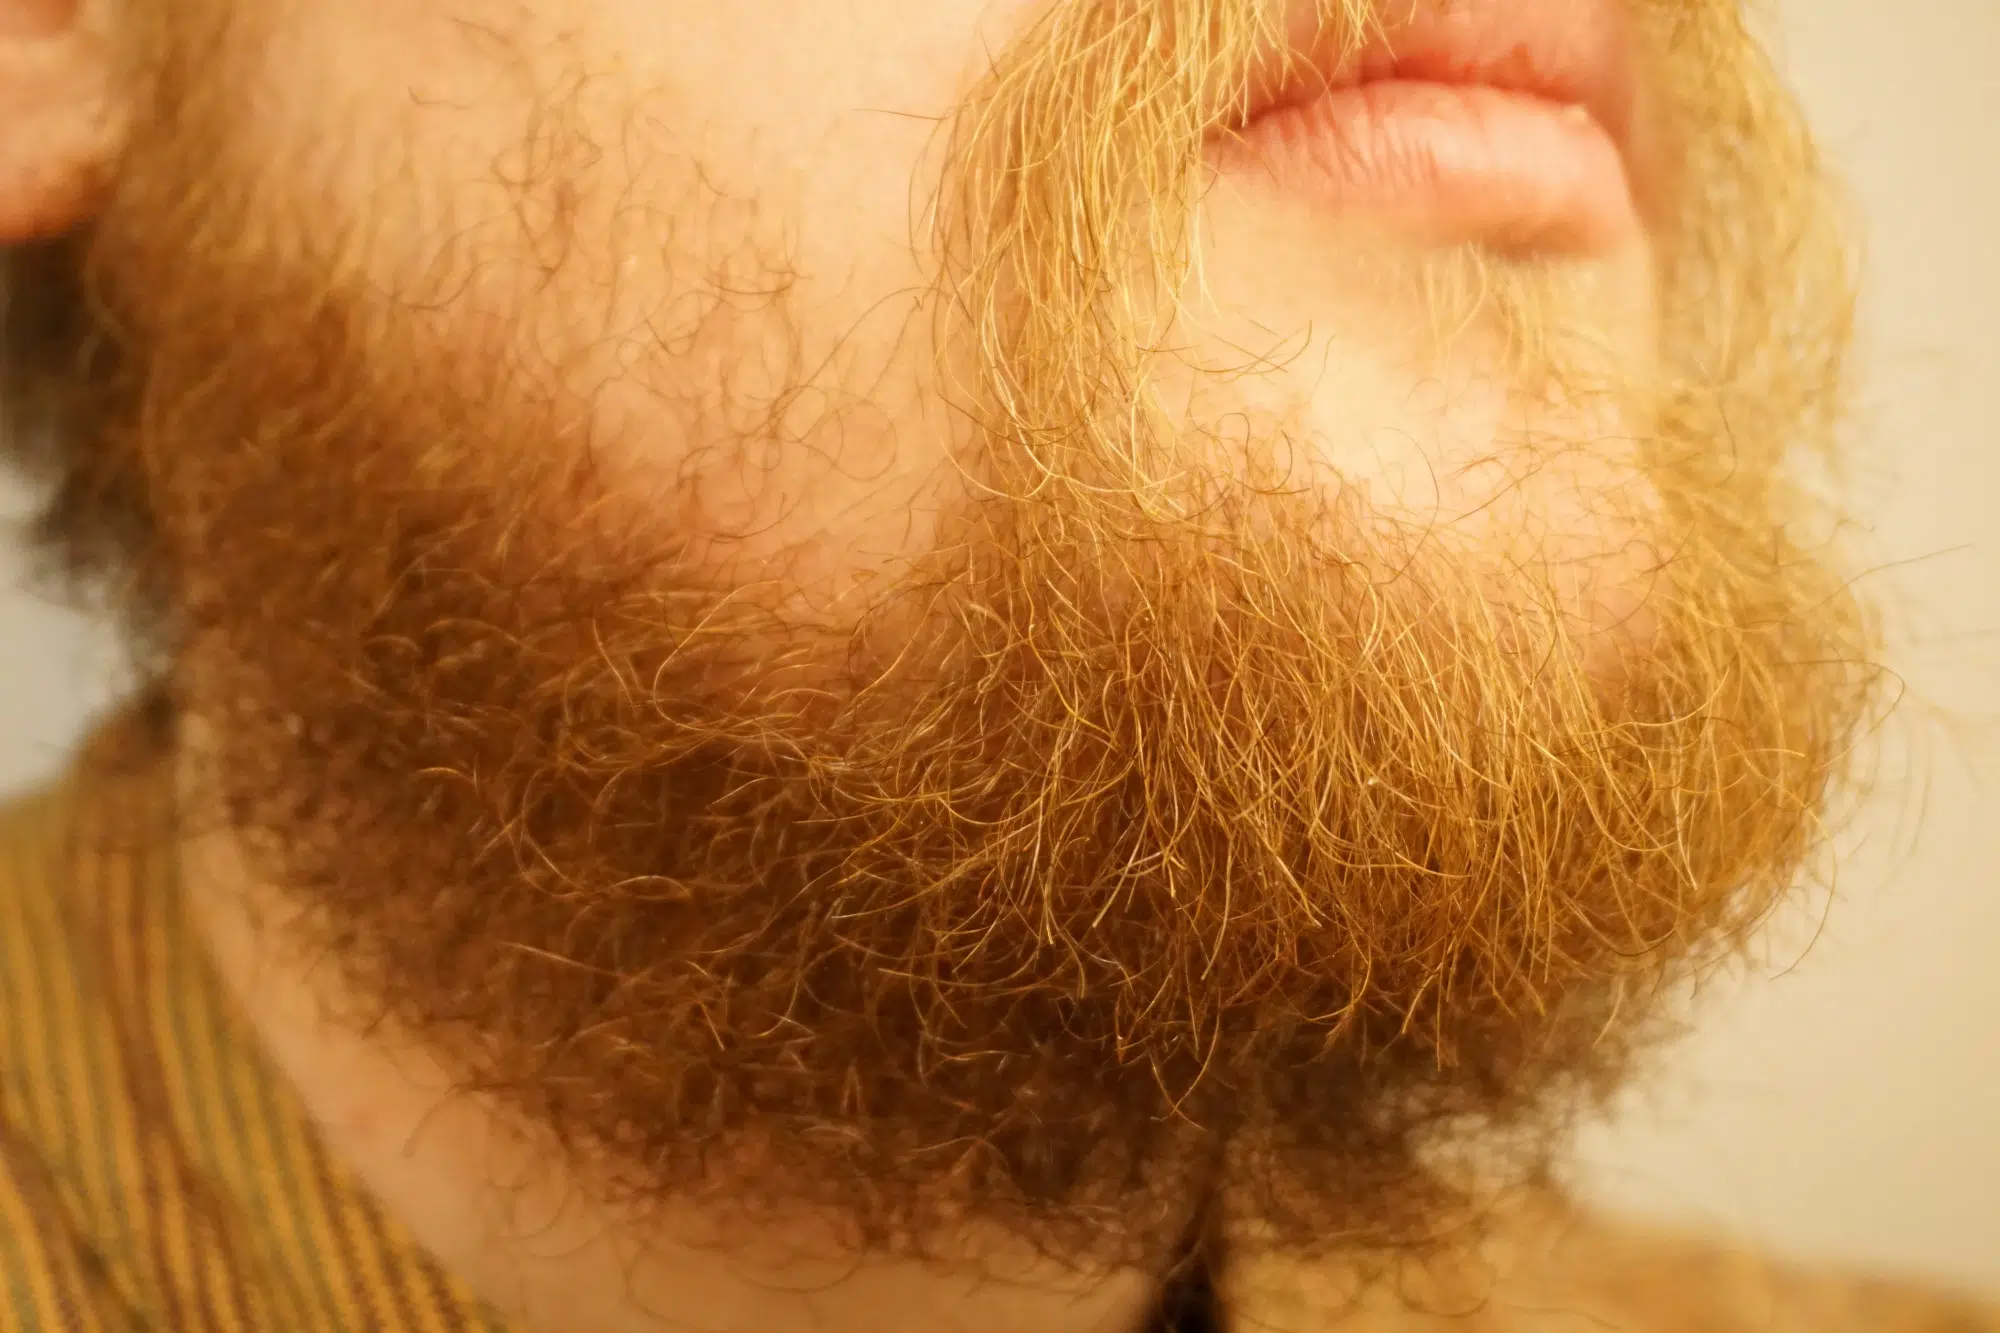 After using Beardbrand